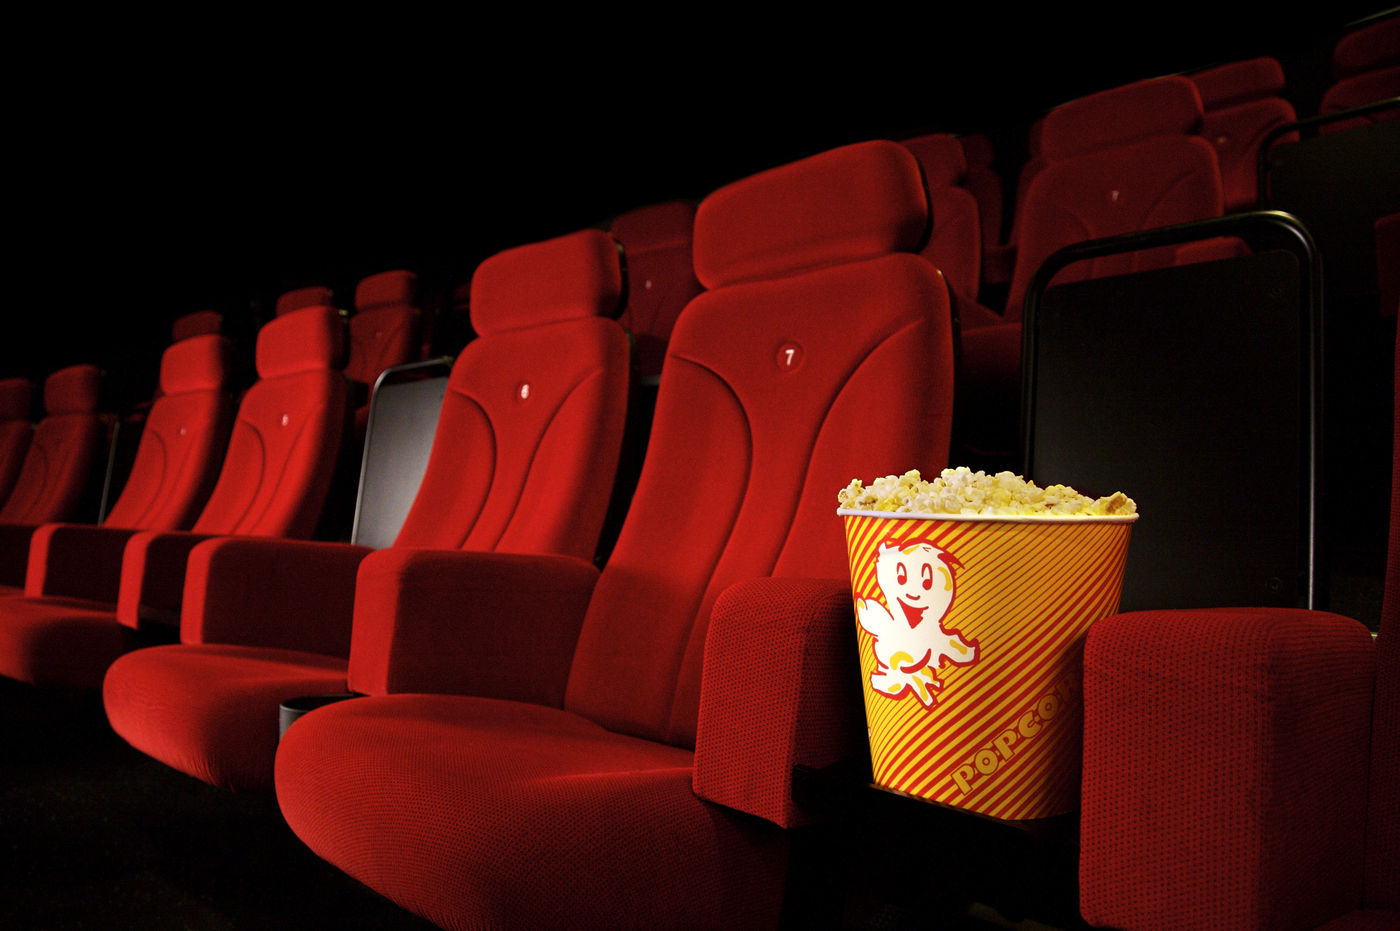 Movie theatre seats with popcorn